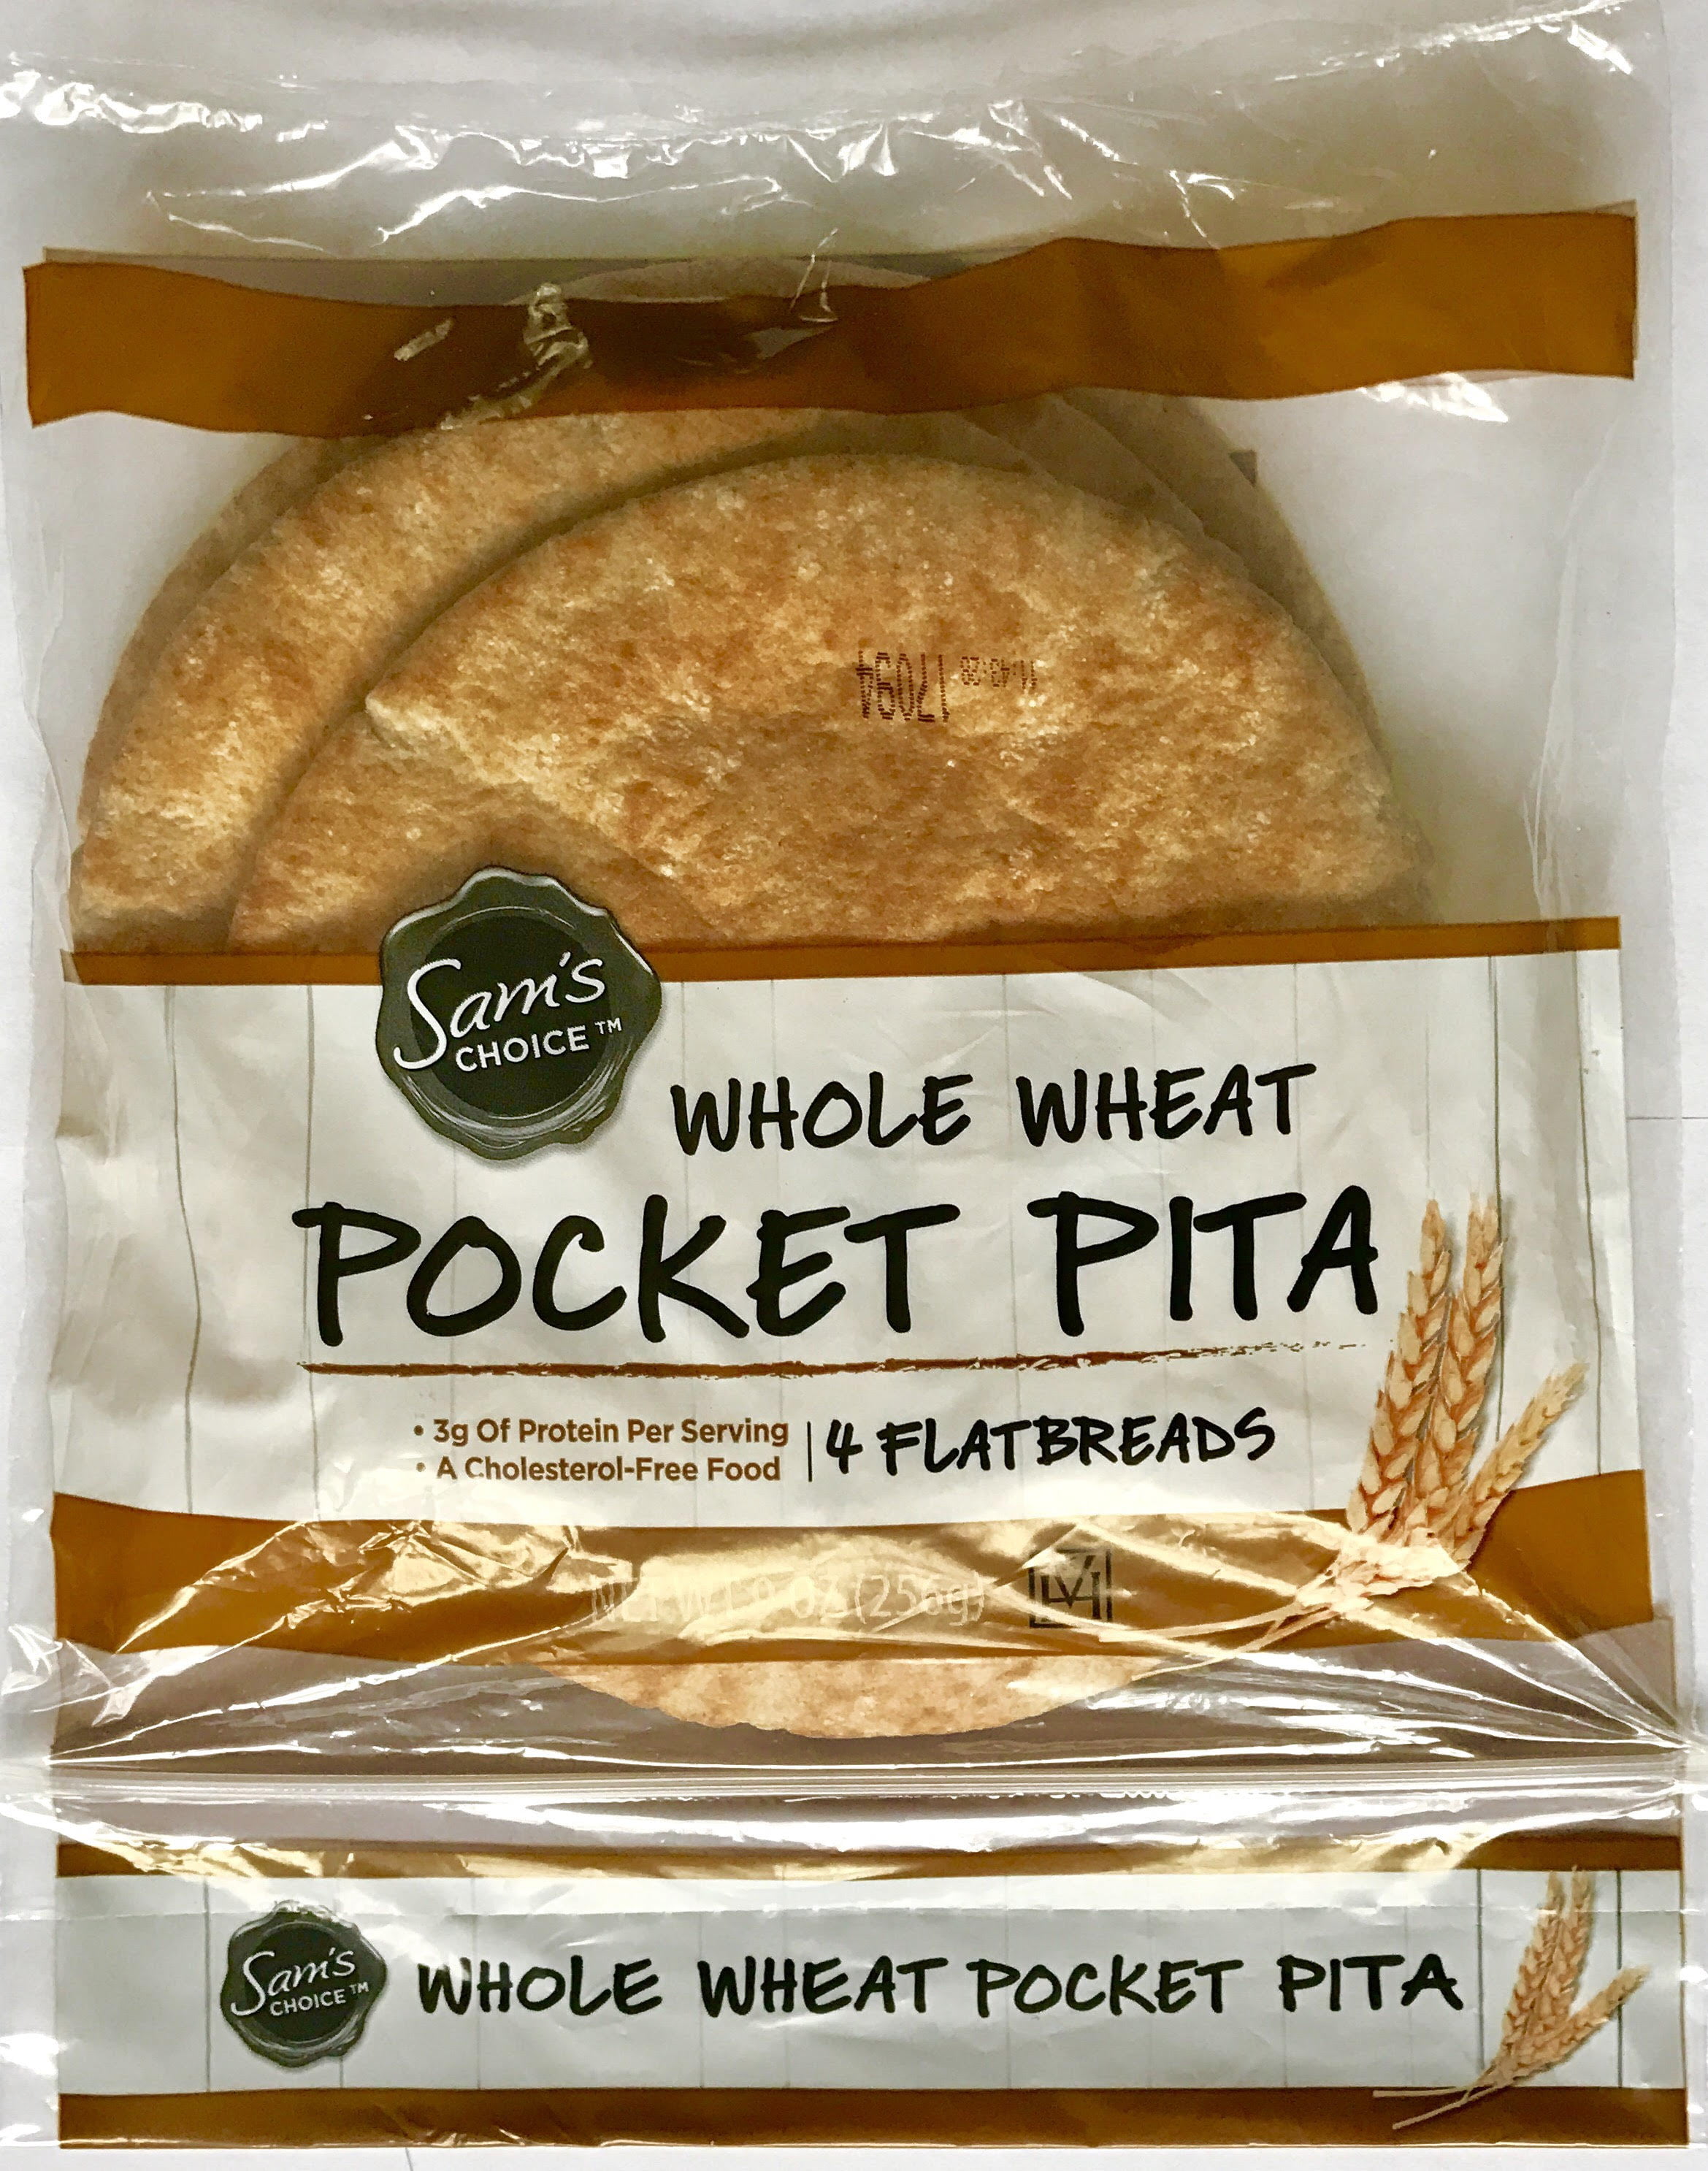 Sam's Choice Whole Wheat Pocket Pita, 9 oz, 4 Count - Walmart.com ...